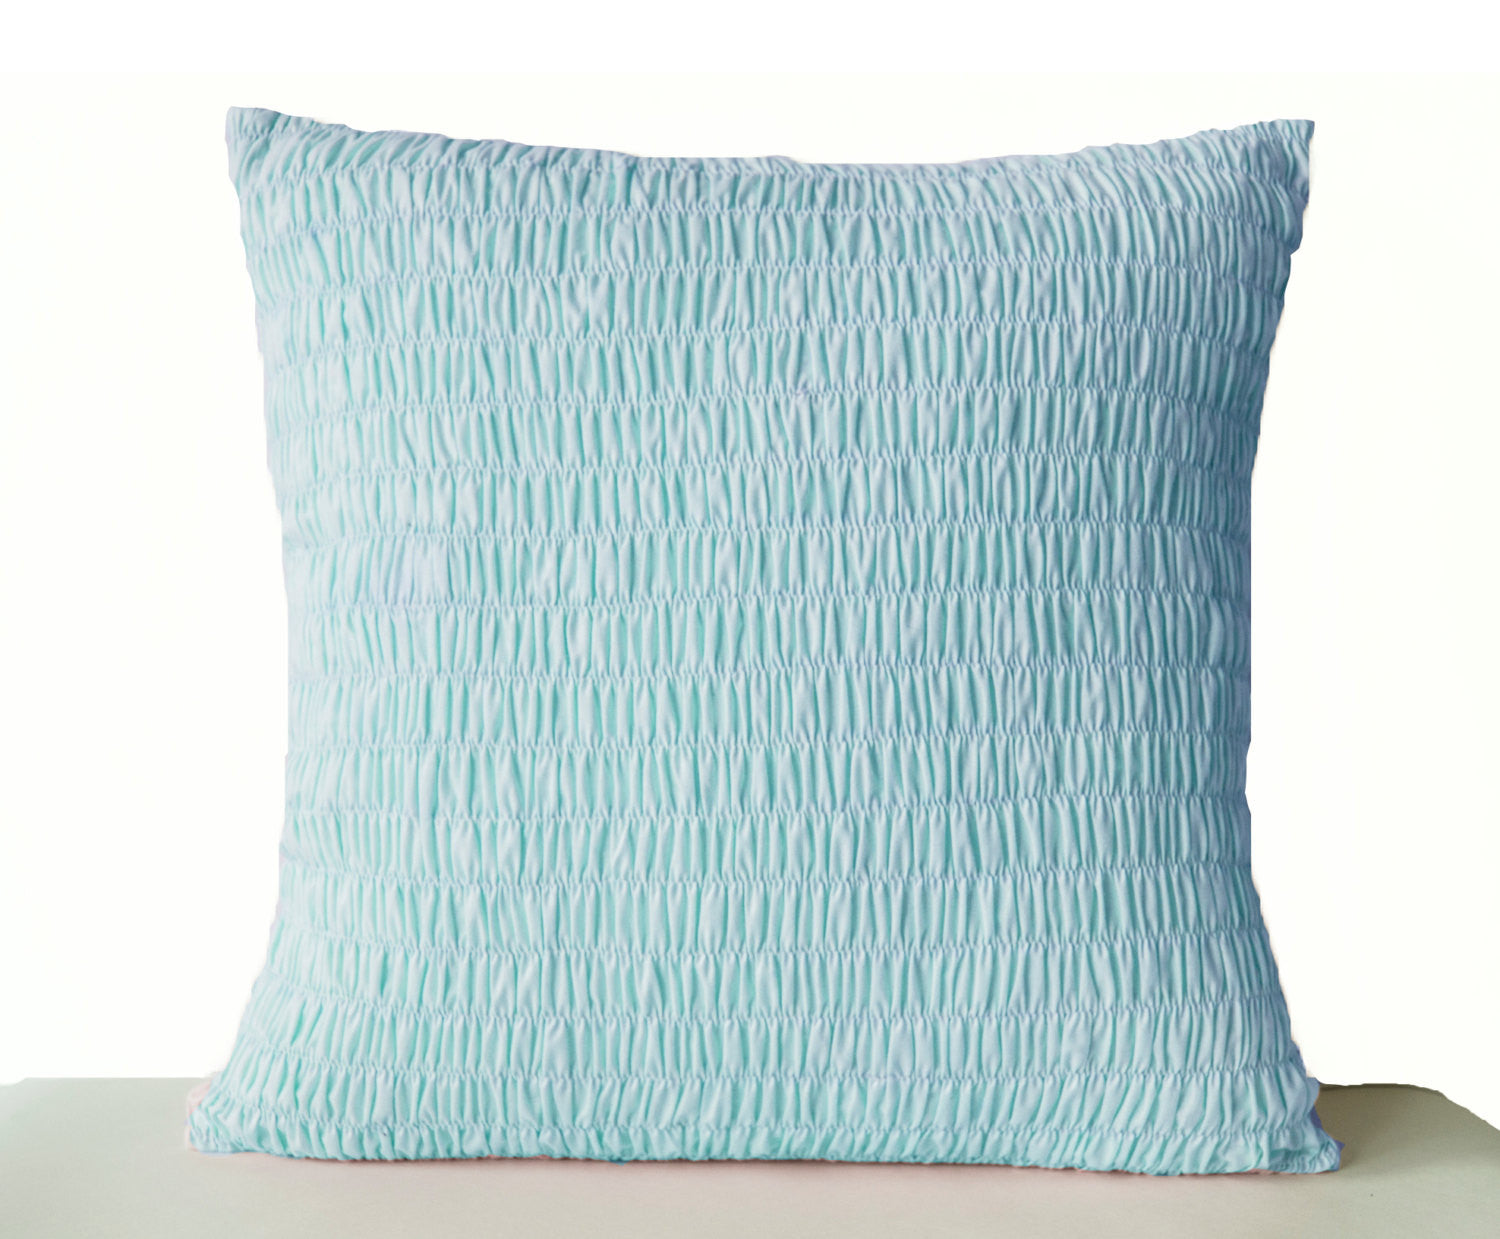 Handmade light blue cotton throw pillow with pleats